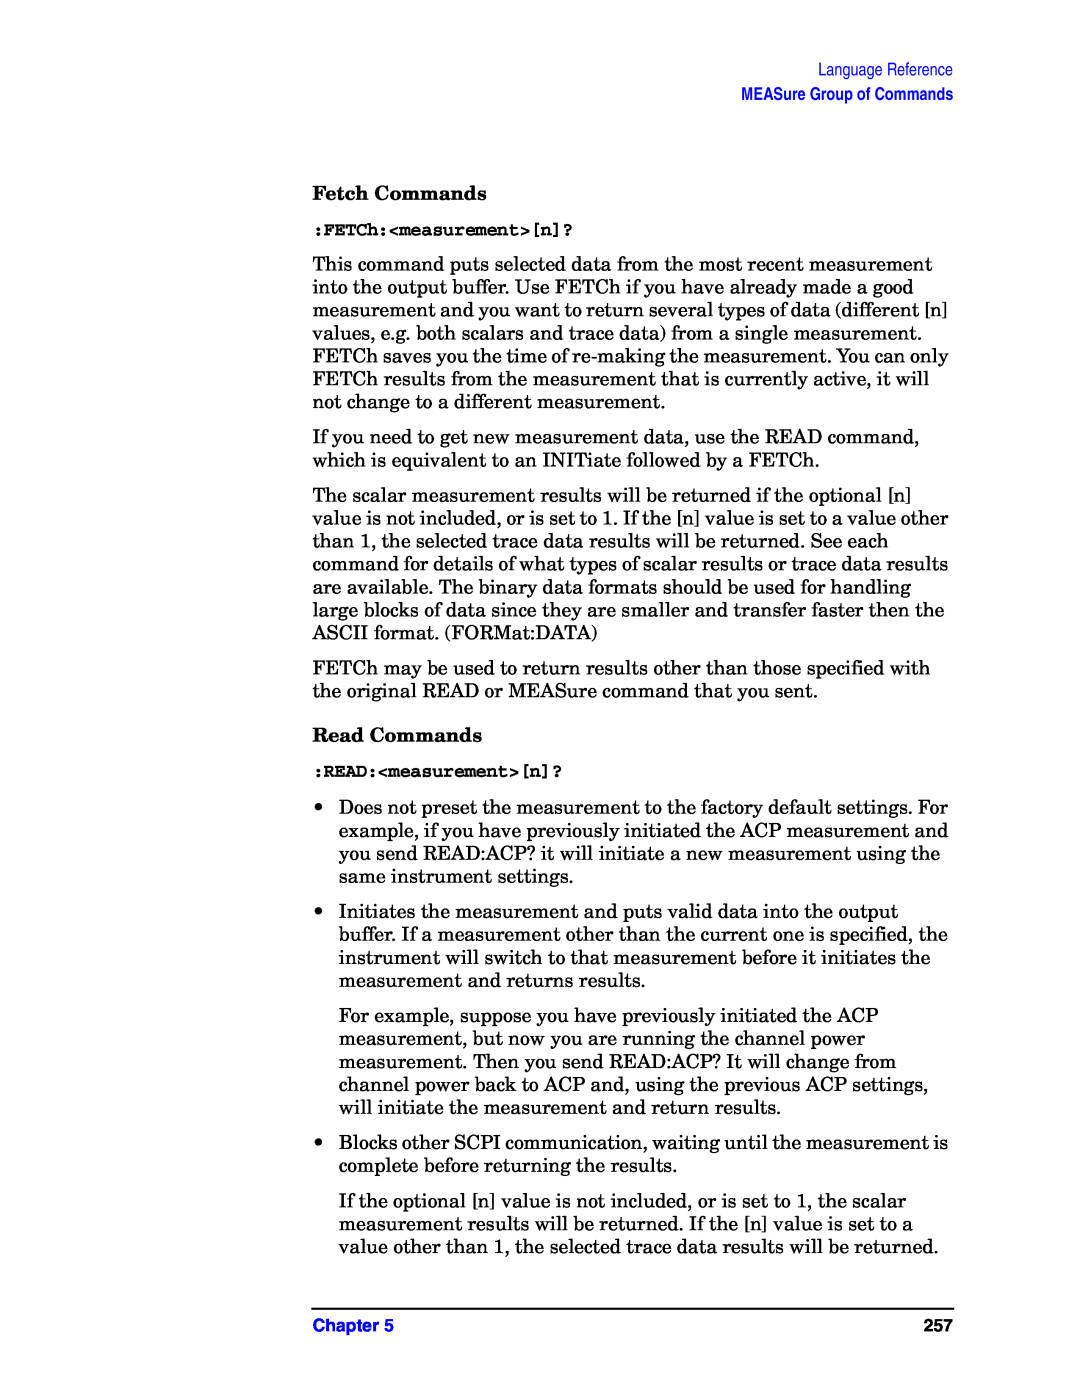 Agilent Technologies E4406A VSA manual Fetch Commands, Read Commands, READ:<measurement>n?, FETCh:<measurement>n? 